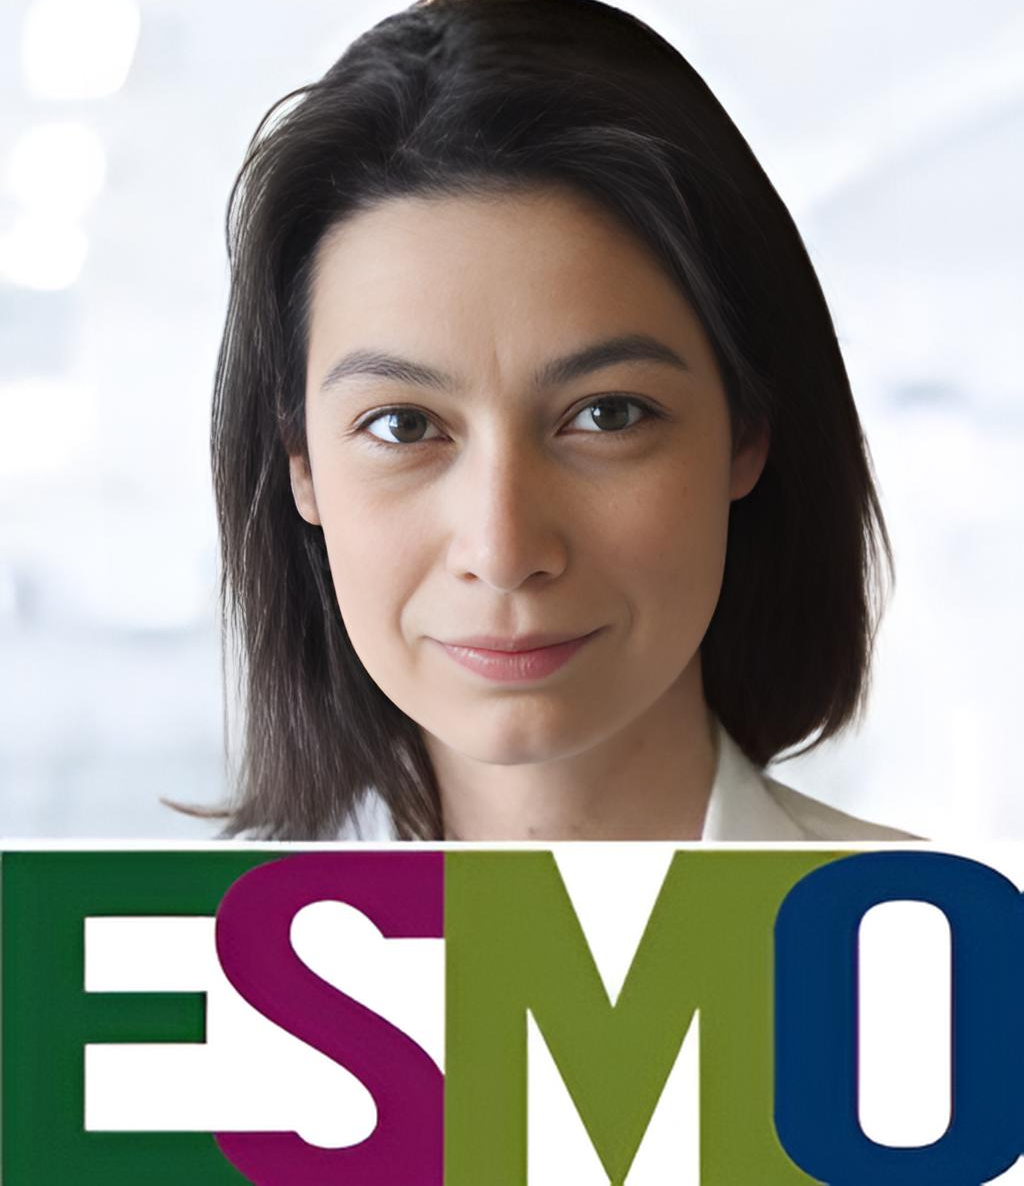 Our Editor Spotlight this week is Chiara Cremolini – ESMO Open